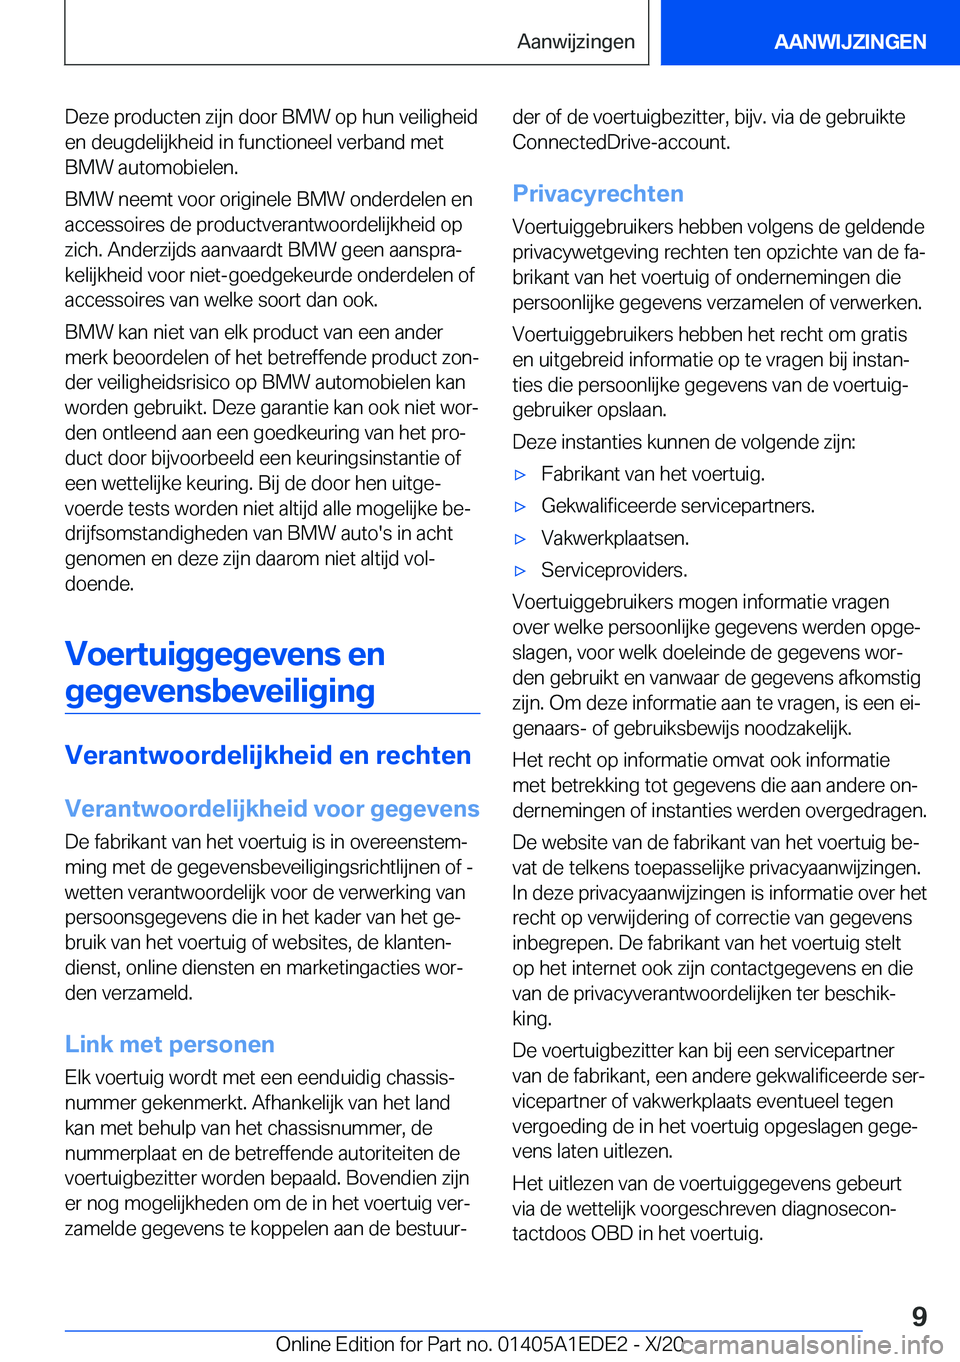 BMW 8 SERIES CONVERTIBLE 2021  Instructieboekjes (in Dutch) �D�e�z�e��p�r�o�d�u�c�t�e�n��z�i�j�n��d�o�o�r��B�M�W��o�p��h�u�n��v�e�i�l�i�g�h�e�i�d�e�n��d�e�u�g�d�e�l�i�j�k�h�e�i�d��i�n��f�u�n�c�t�i�o�n�e�e�l��v�e�r�b�a�n�d��m�e�t�B�M�W��a�u�t�o�m�o